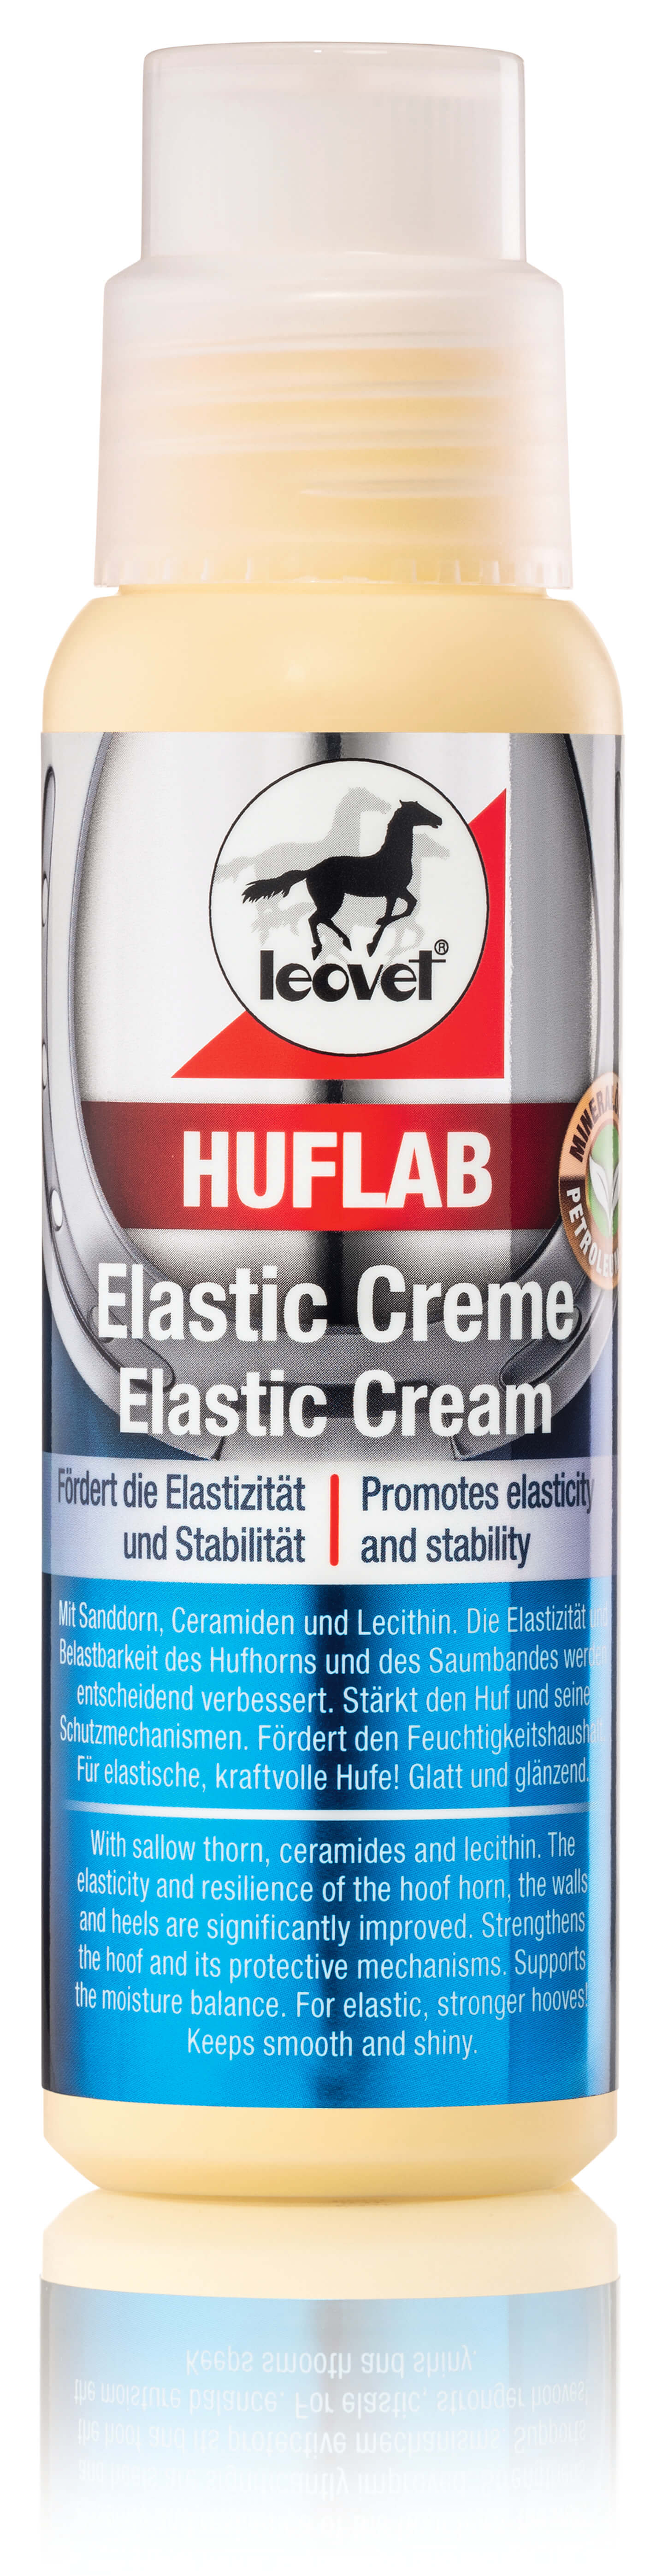 leovet HUFLAB Elastic Creme